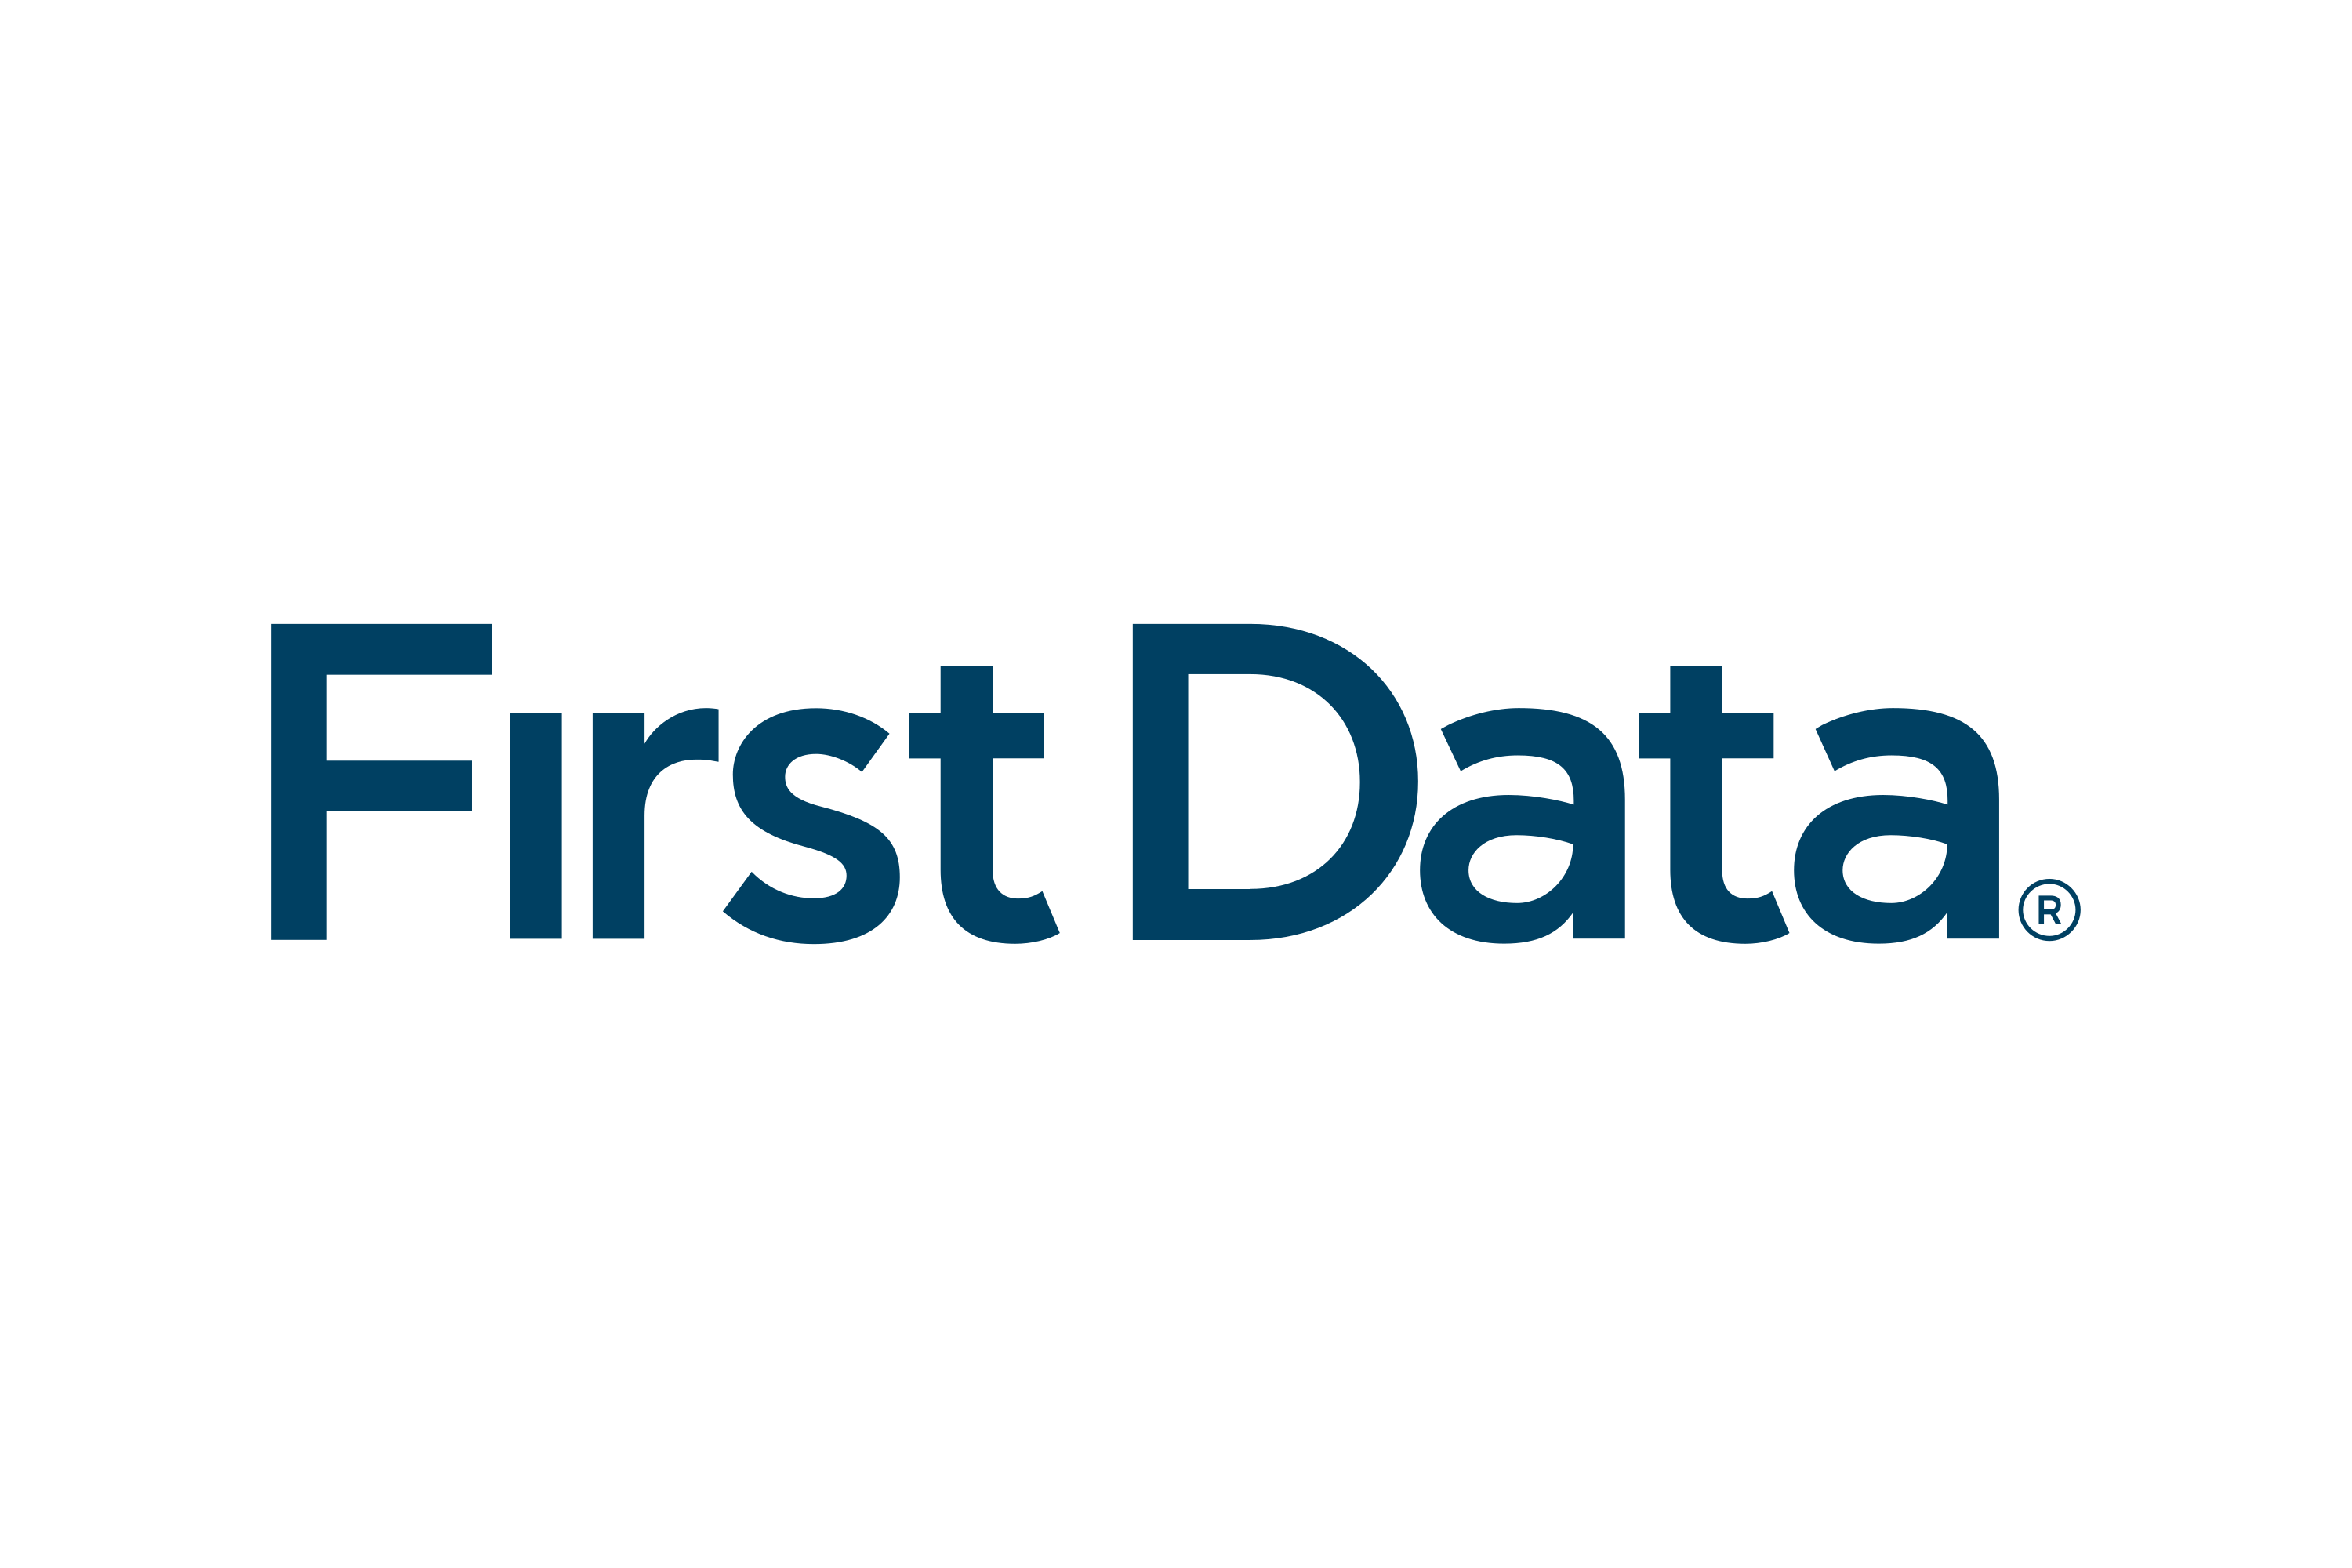 01 first. First data. Data логотип. Firstdata лого. First data компания.